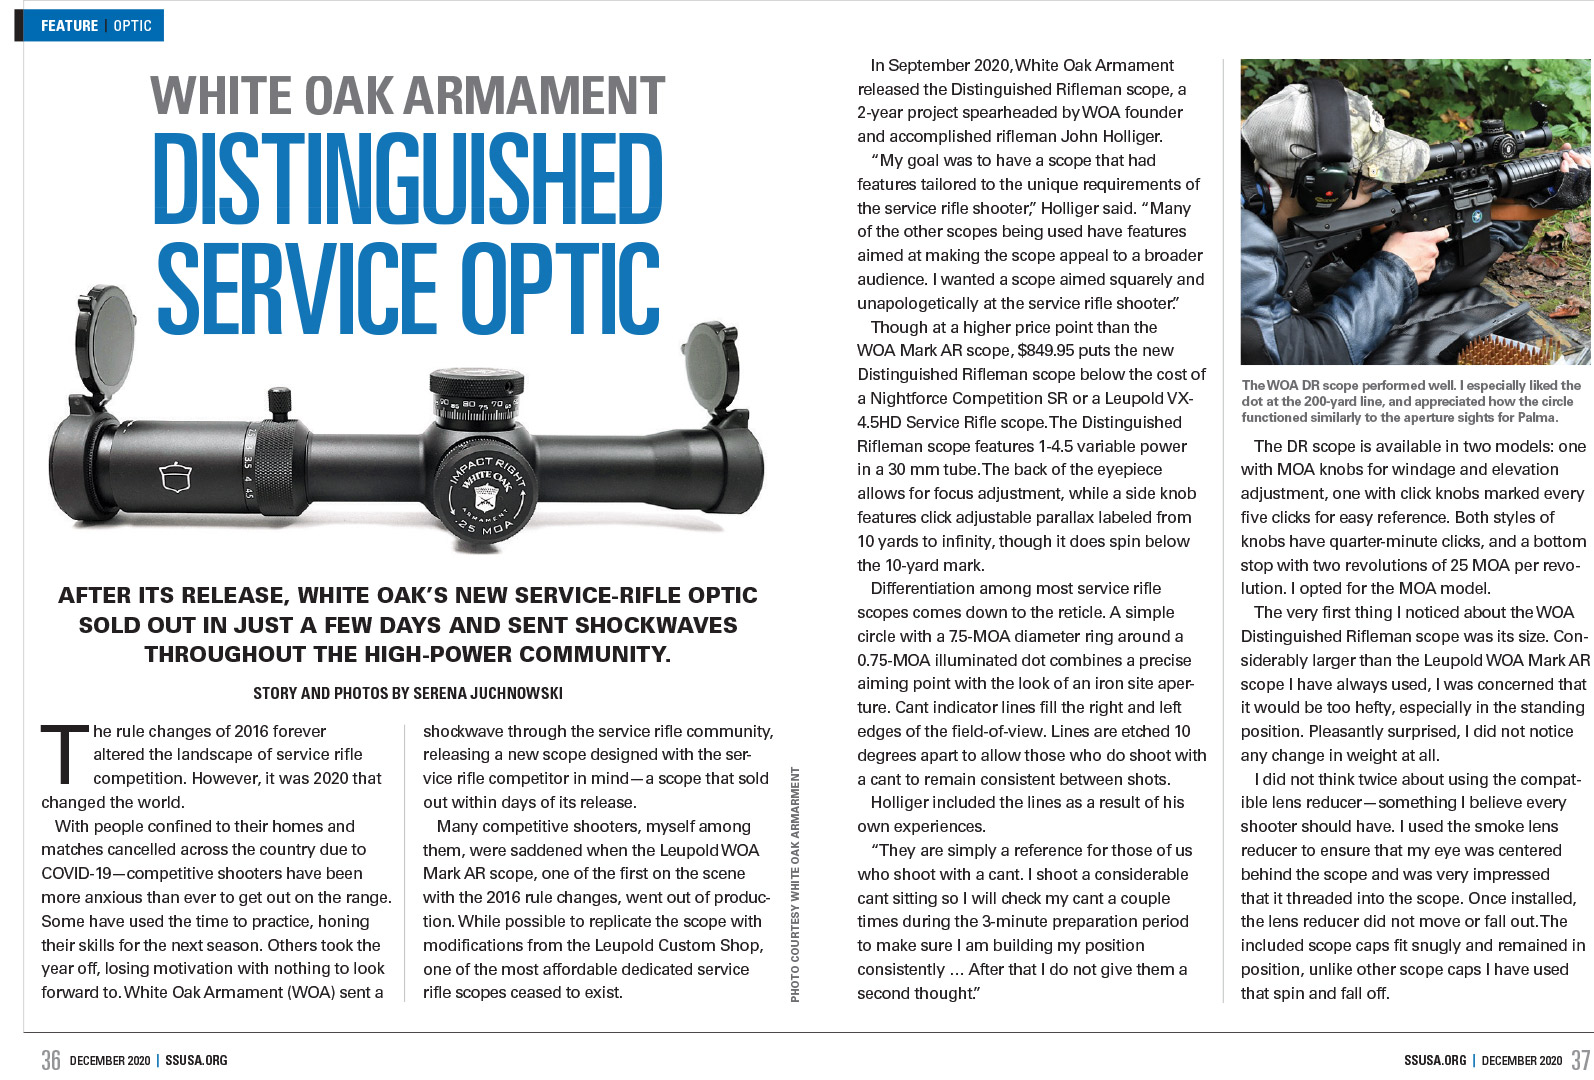 White Oak Armament Distinguished Service Optic